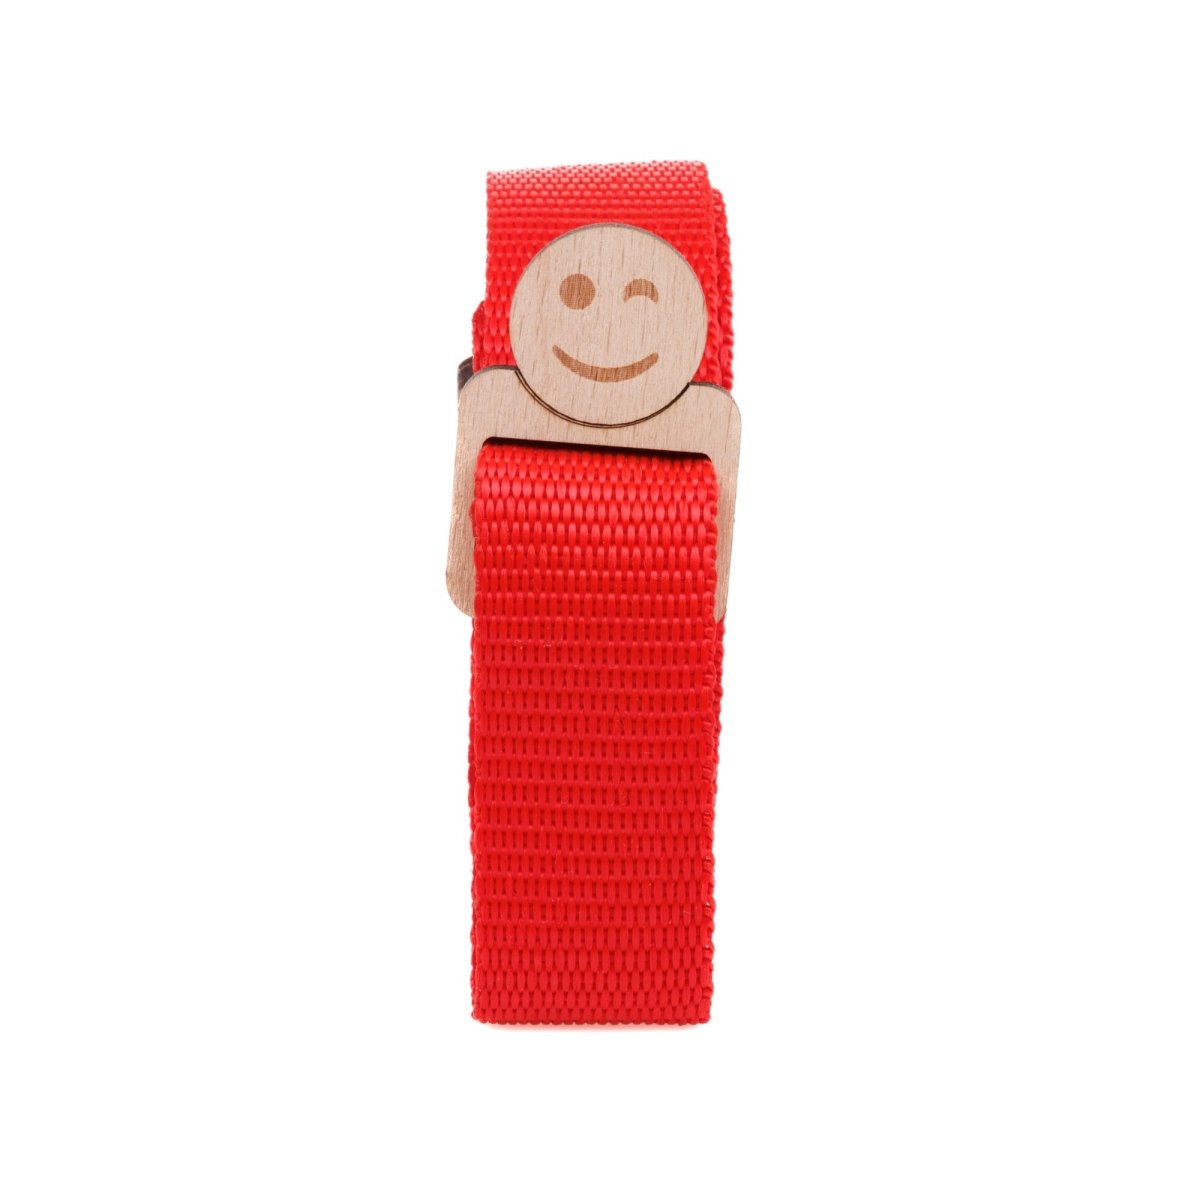 Jollylook Kameragurt rot (ohne Kamera) - artidomo